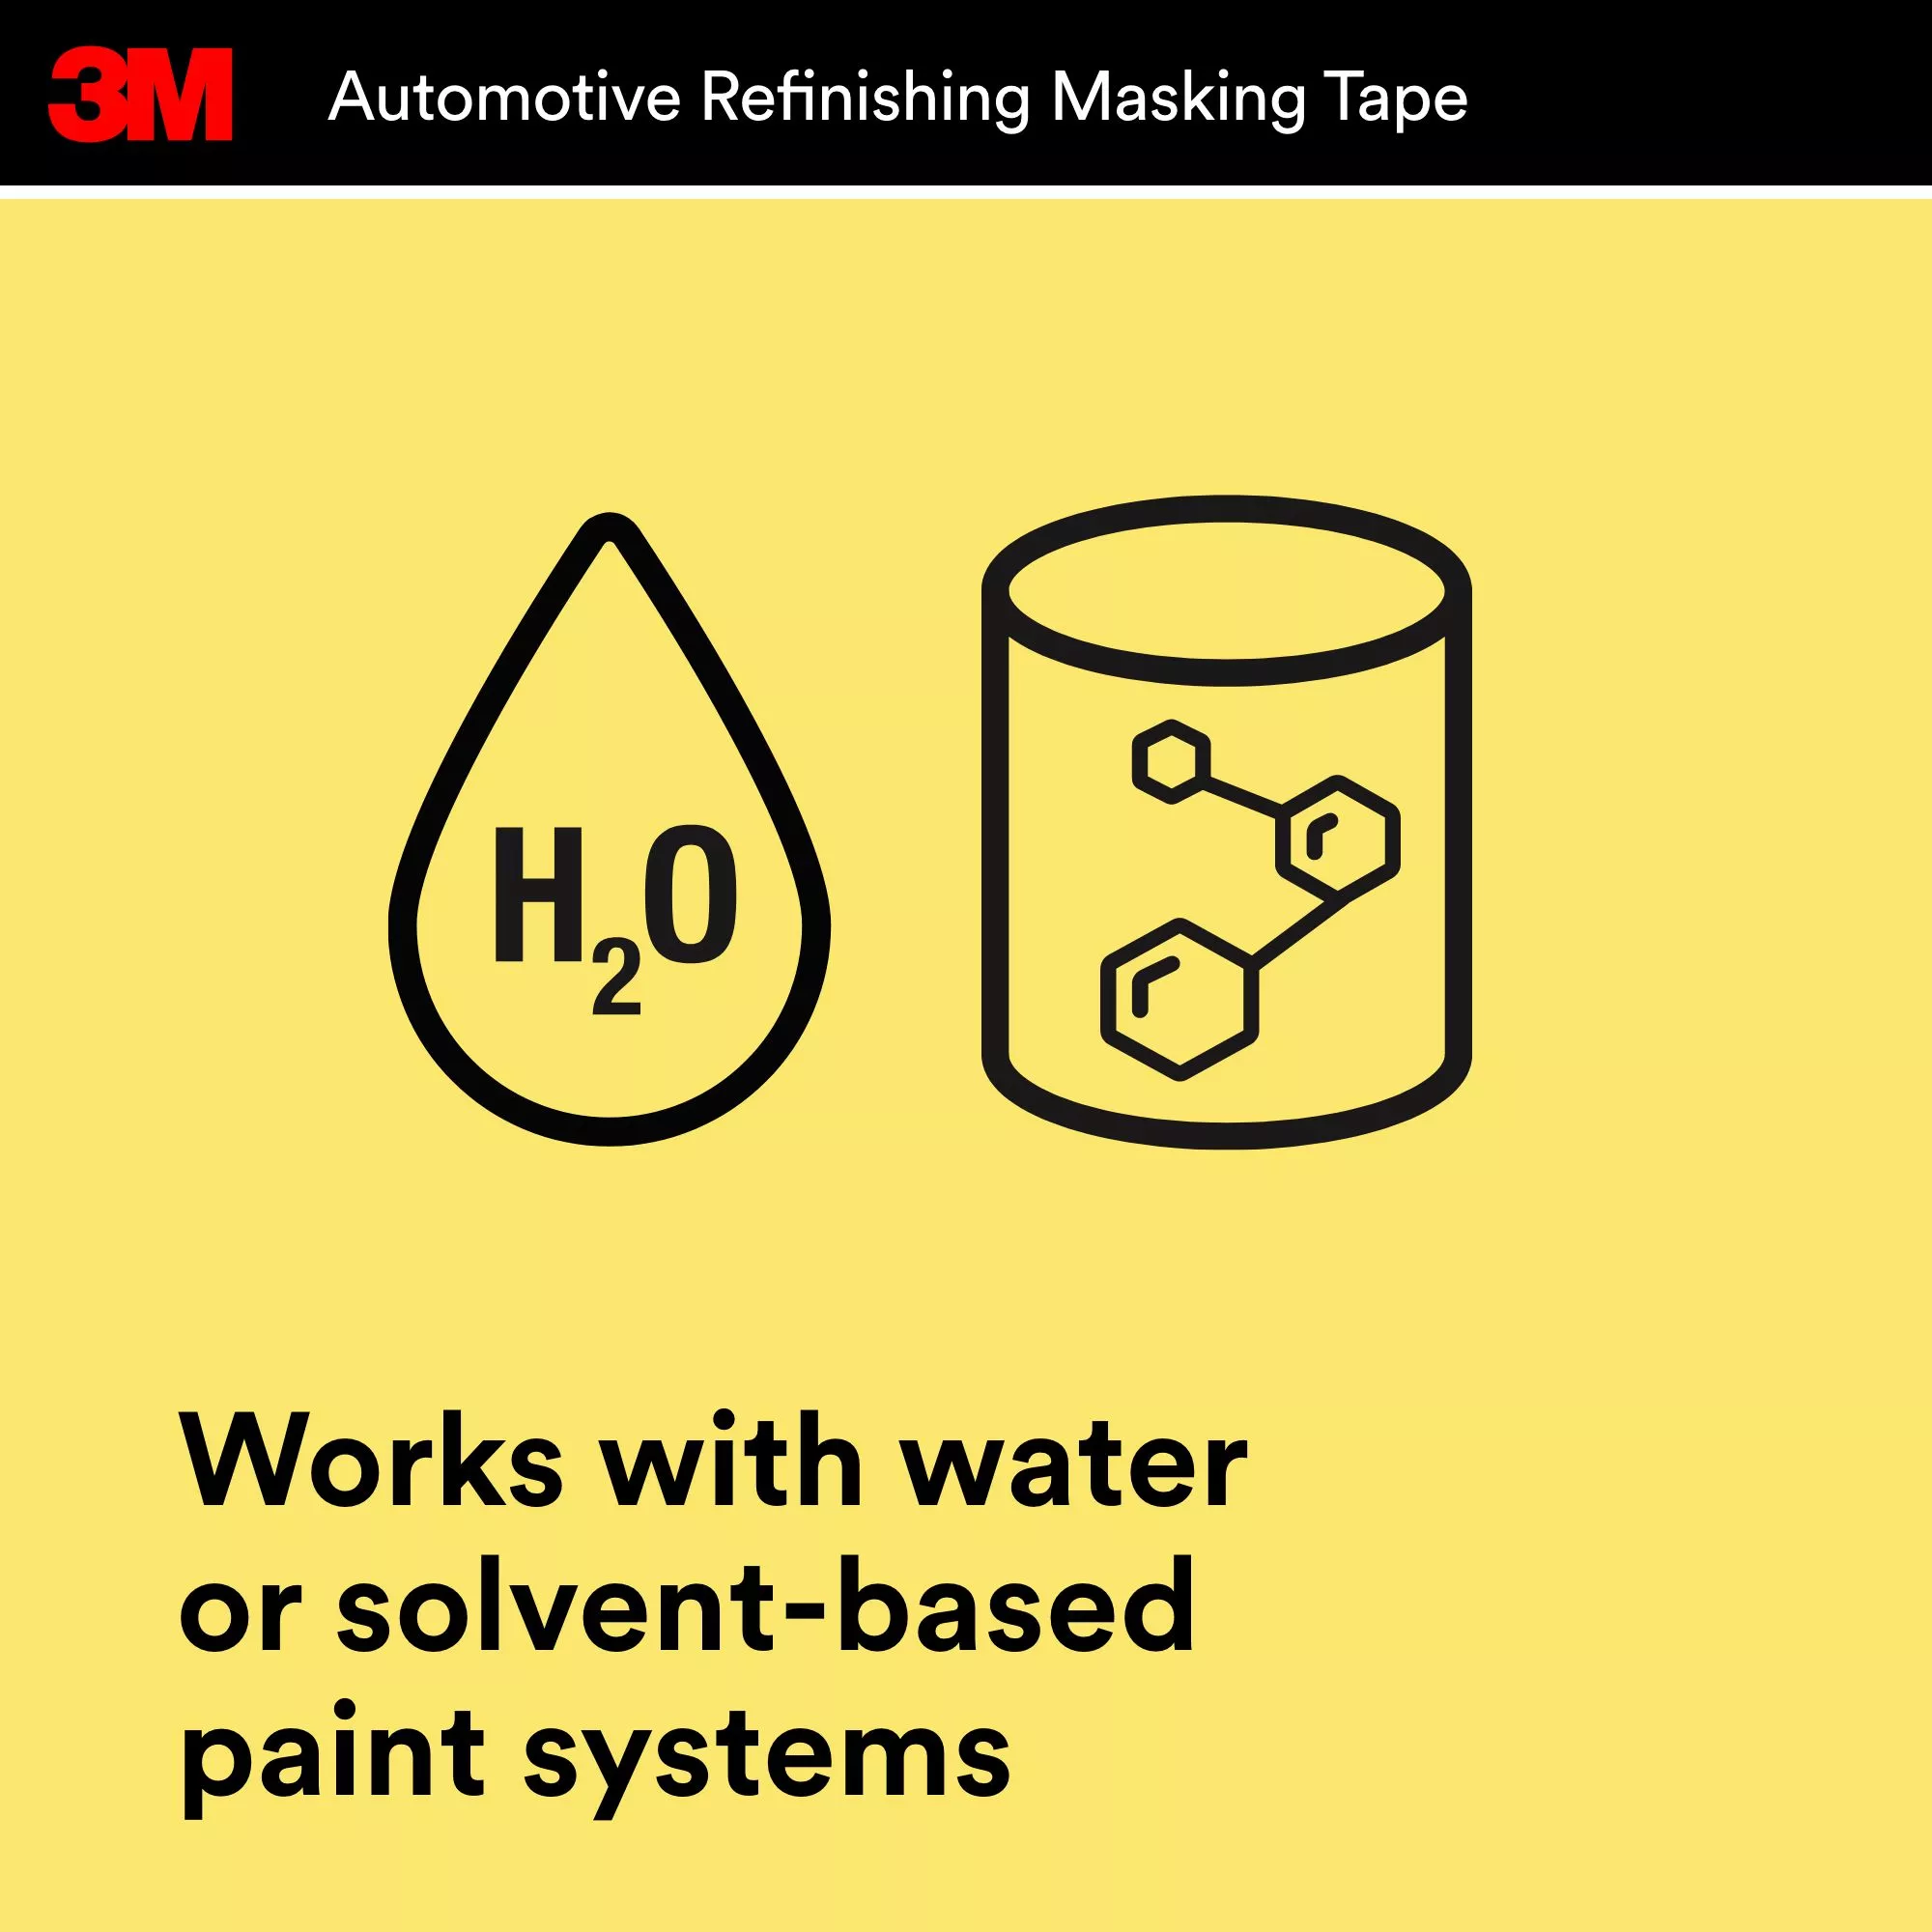 SKU 7000120059 | 3M™ Automotive Refinish Masking Tape